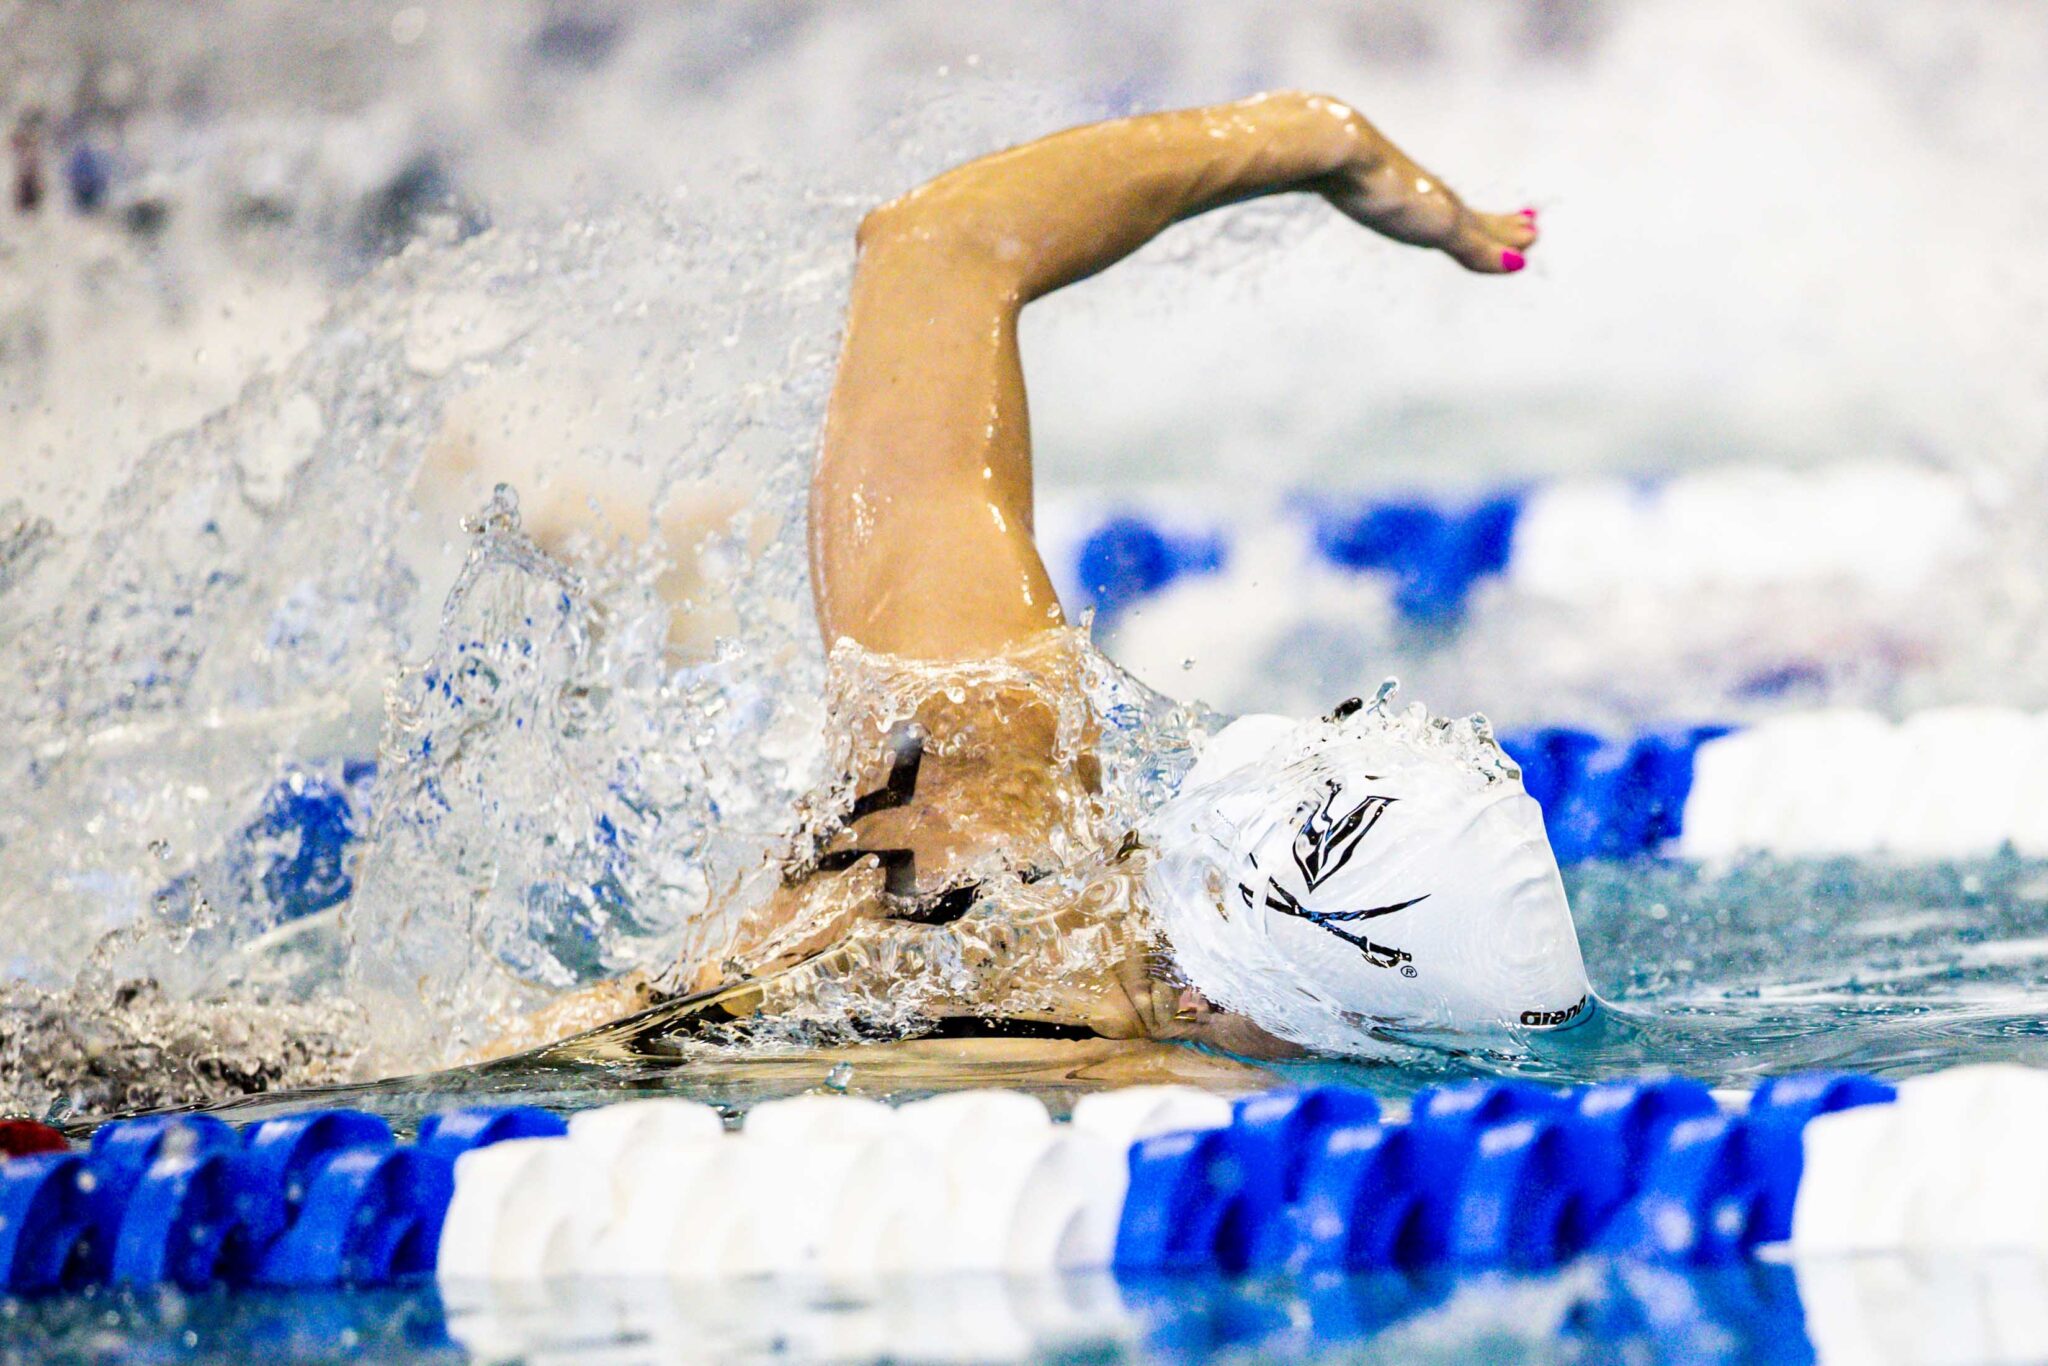 Olympian Brooke Forde defends transgender swimmer Lia Thomas